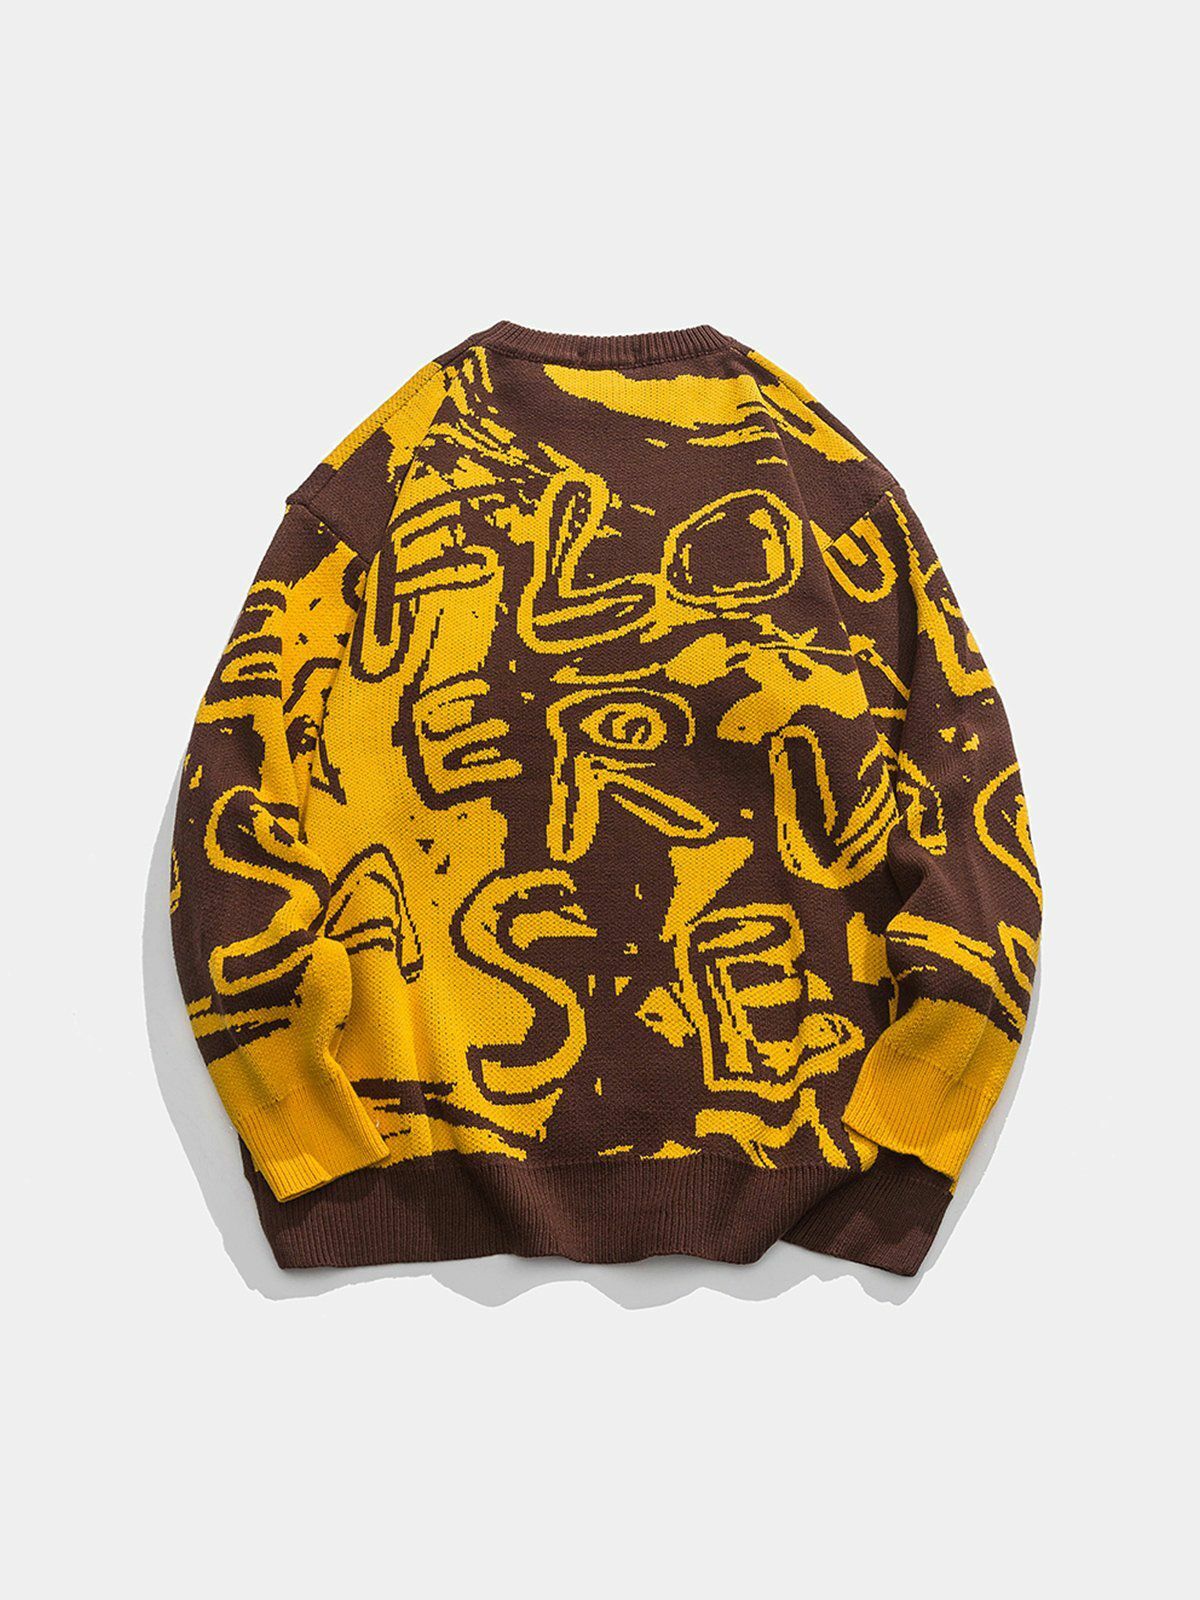 bold graffiti print sweater urban fashion statement 5315